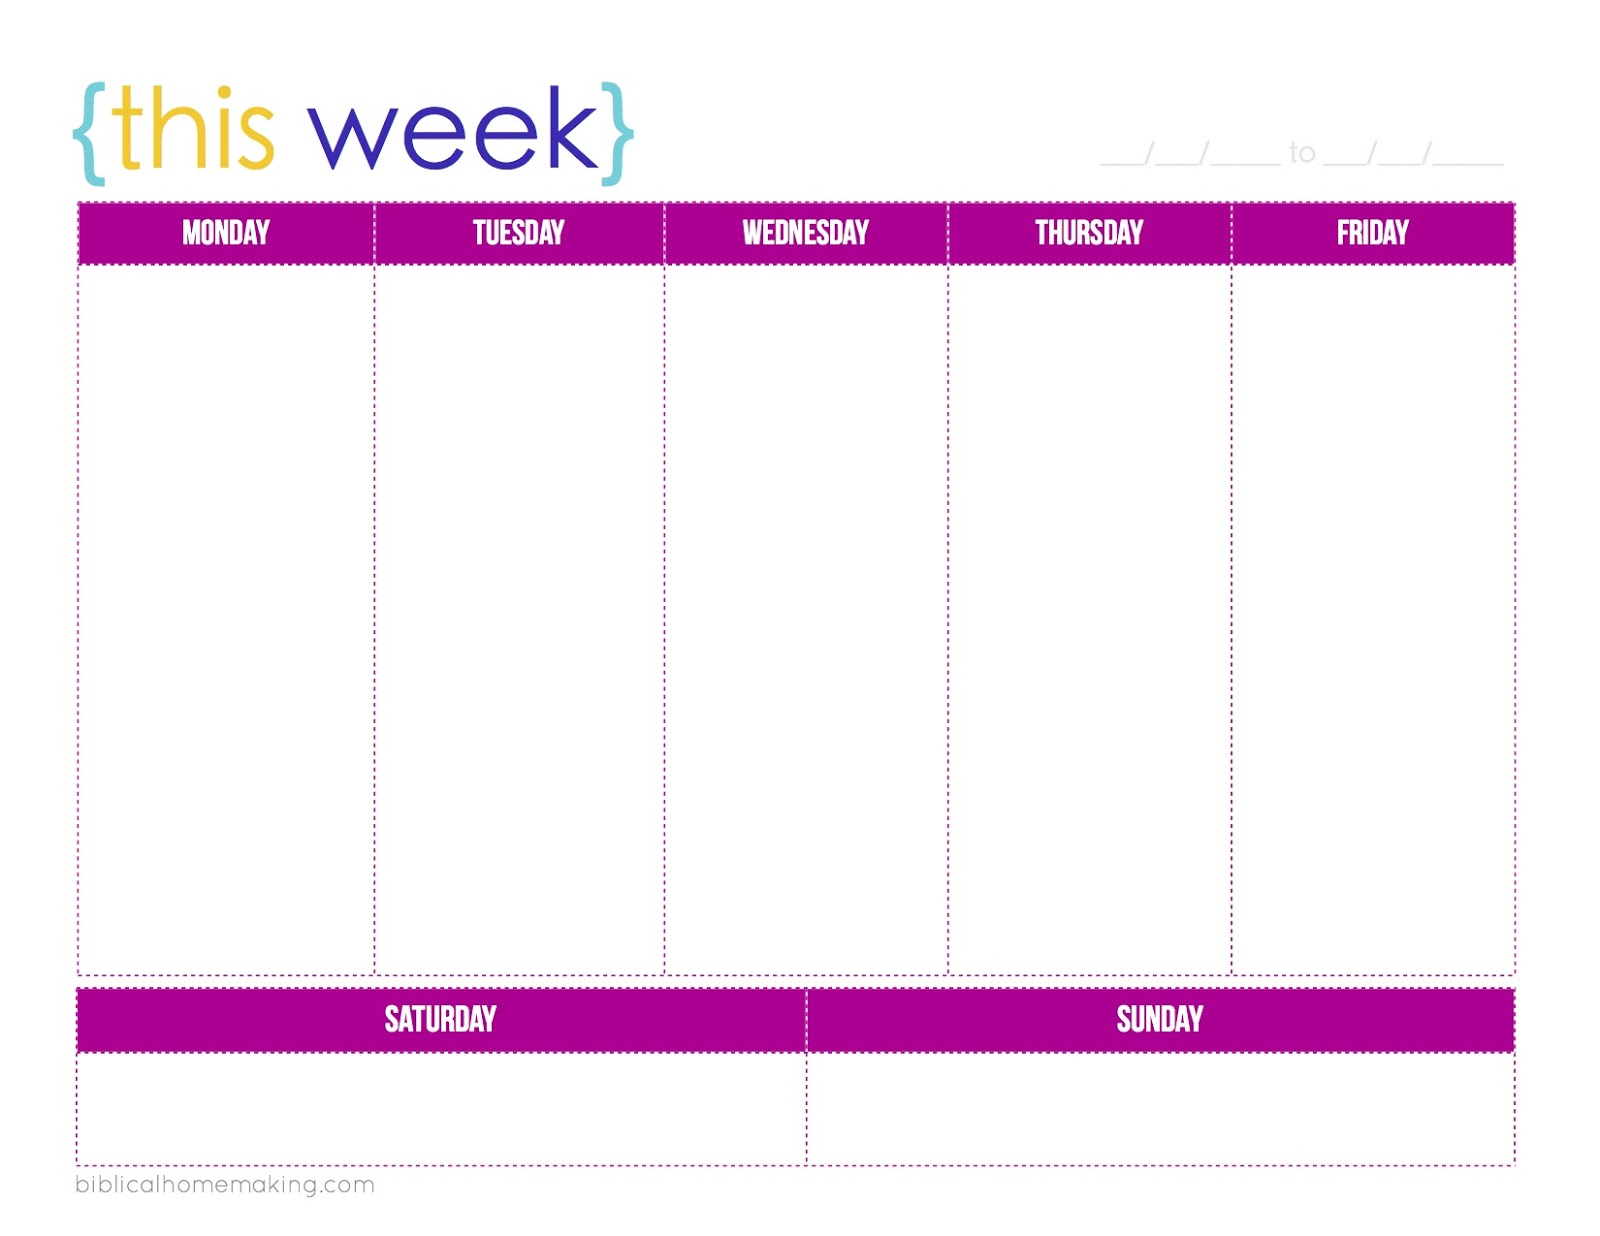 One Week Monday Through Friday Calendar Template | Example Calendar regarding Monthly Template Moday To Friday